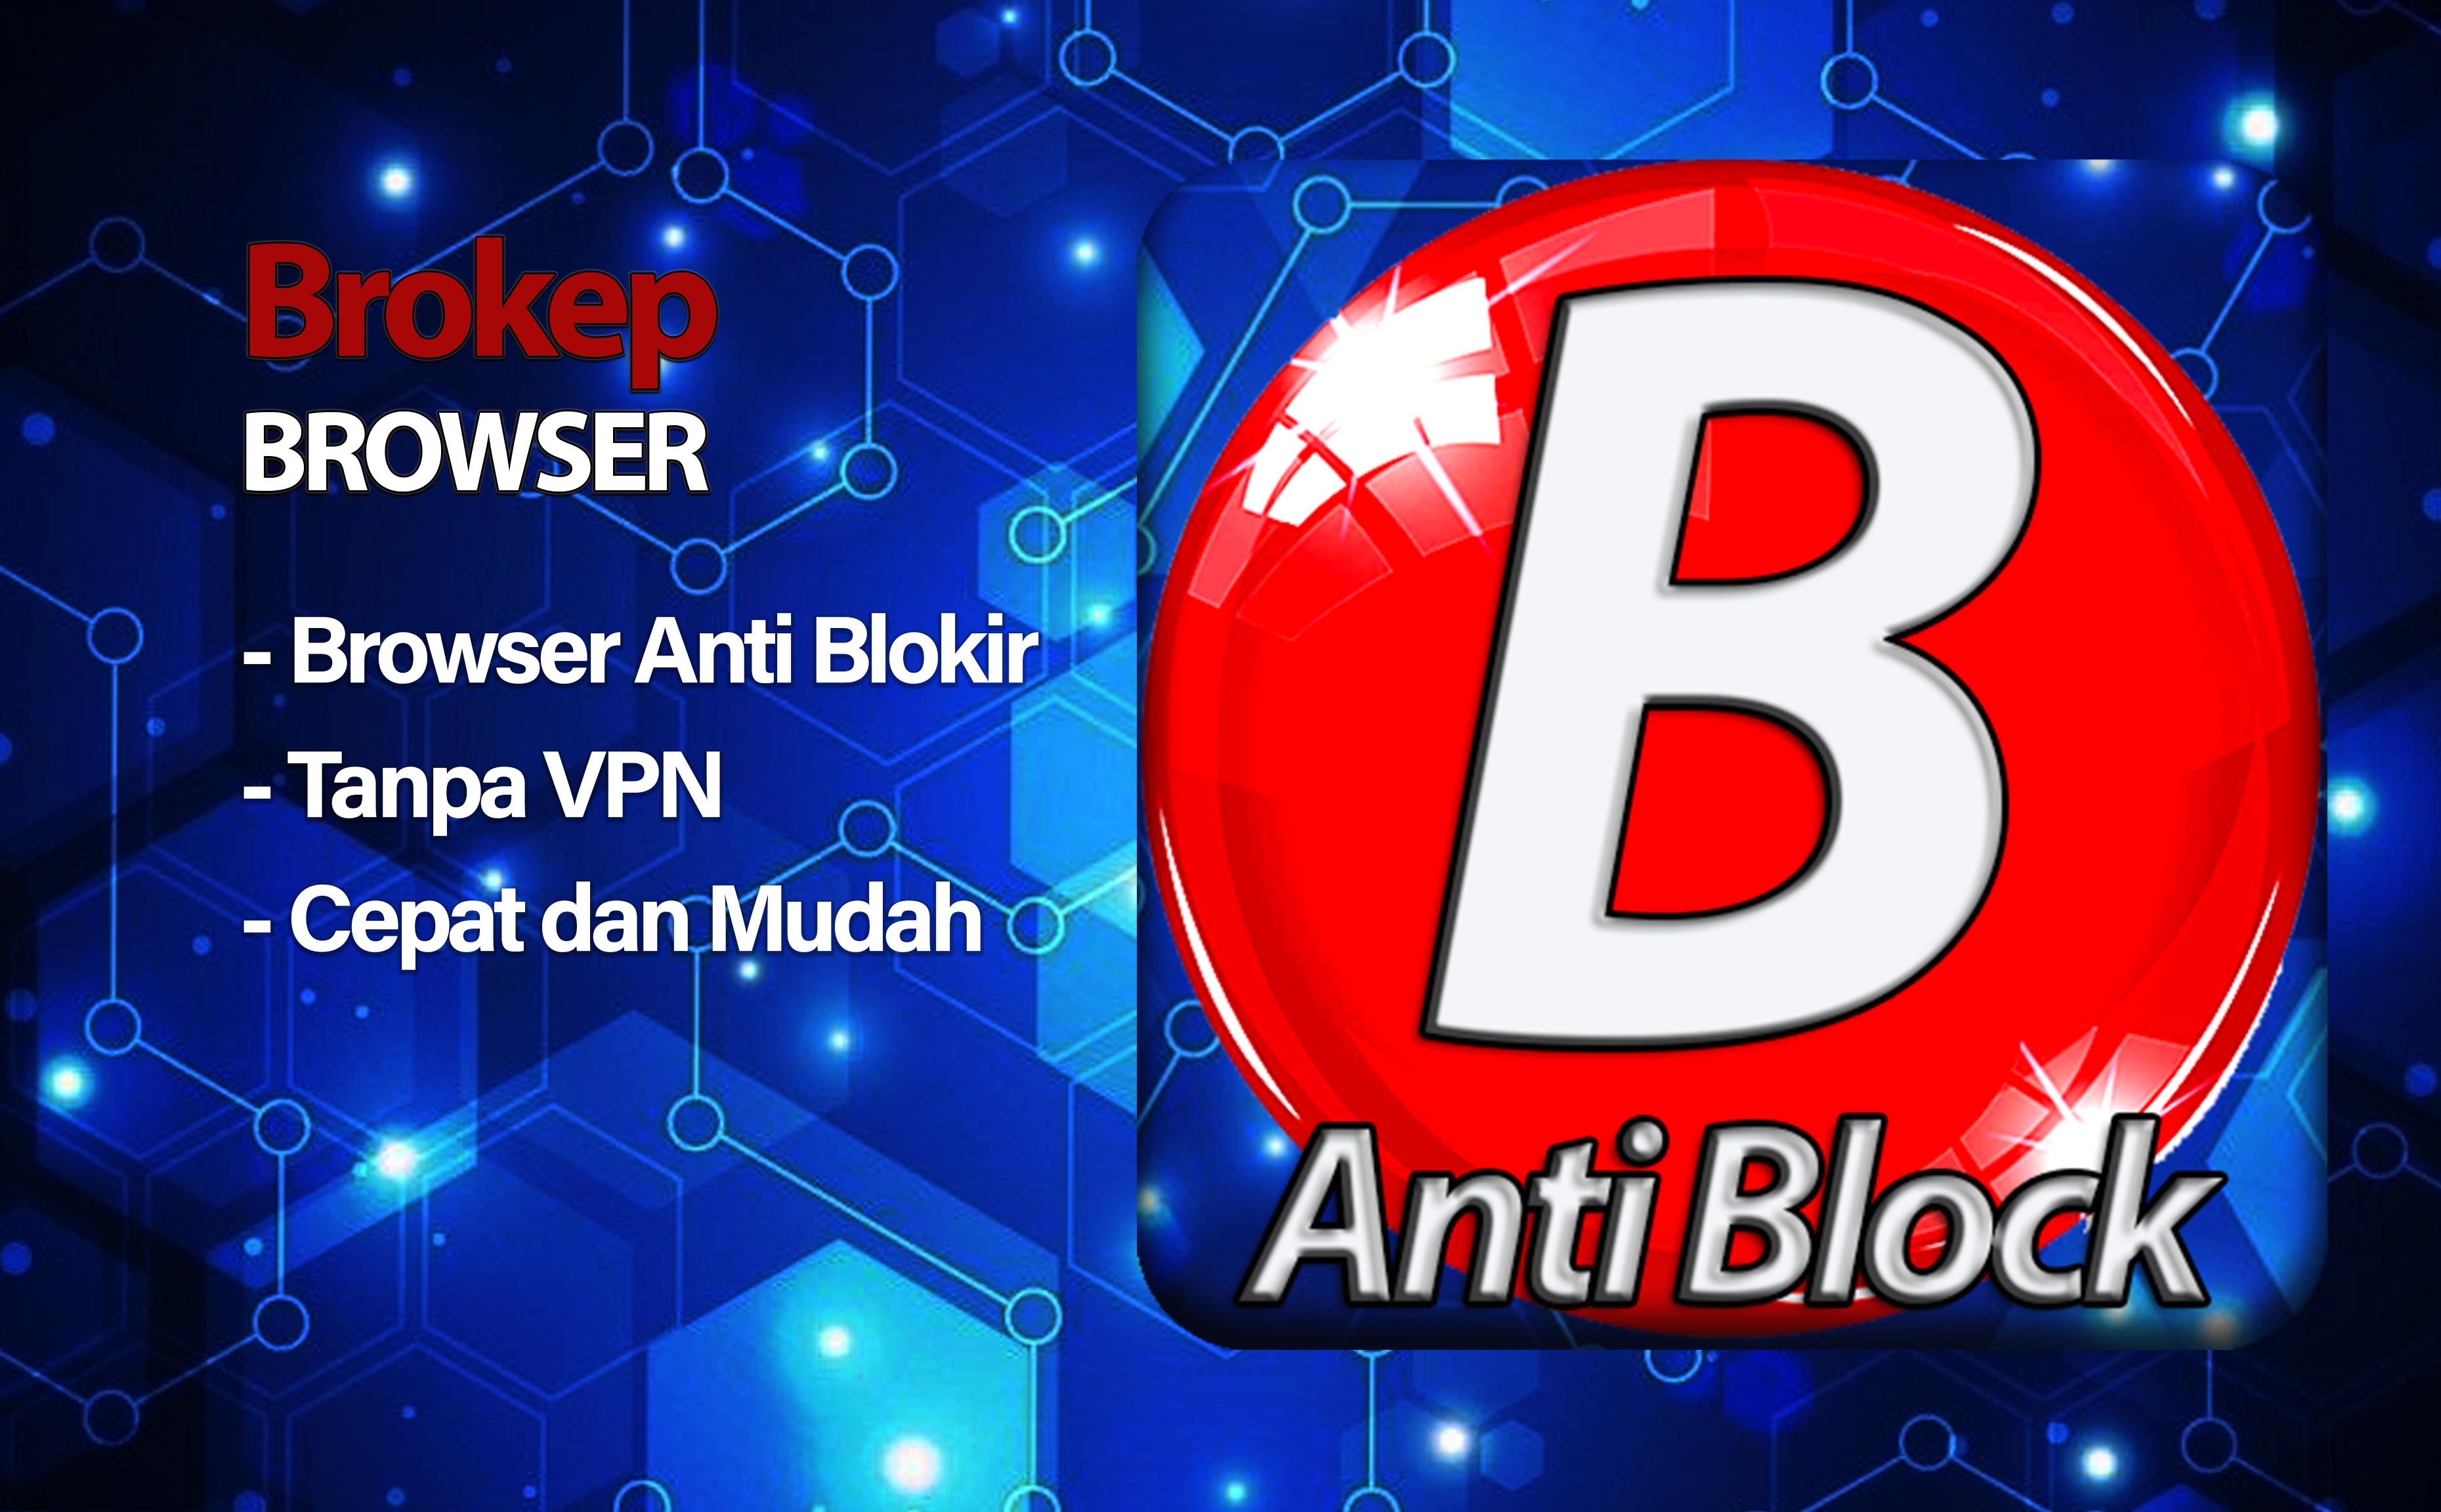 Brokep Browser Anti Blokir